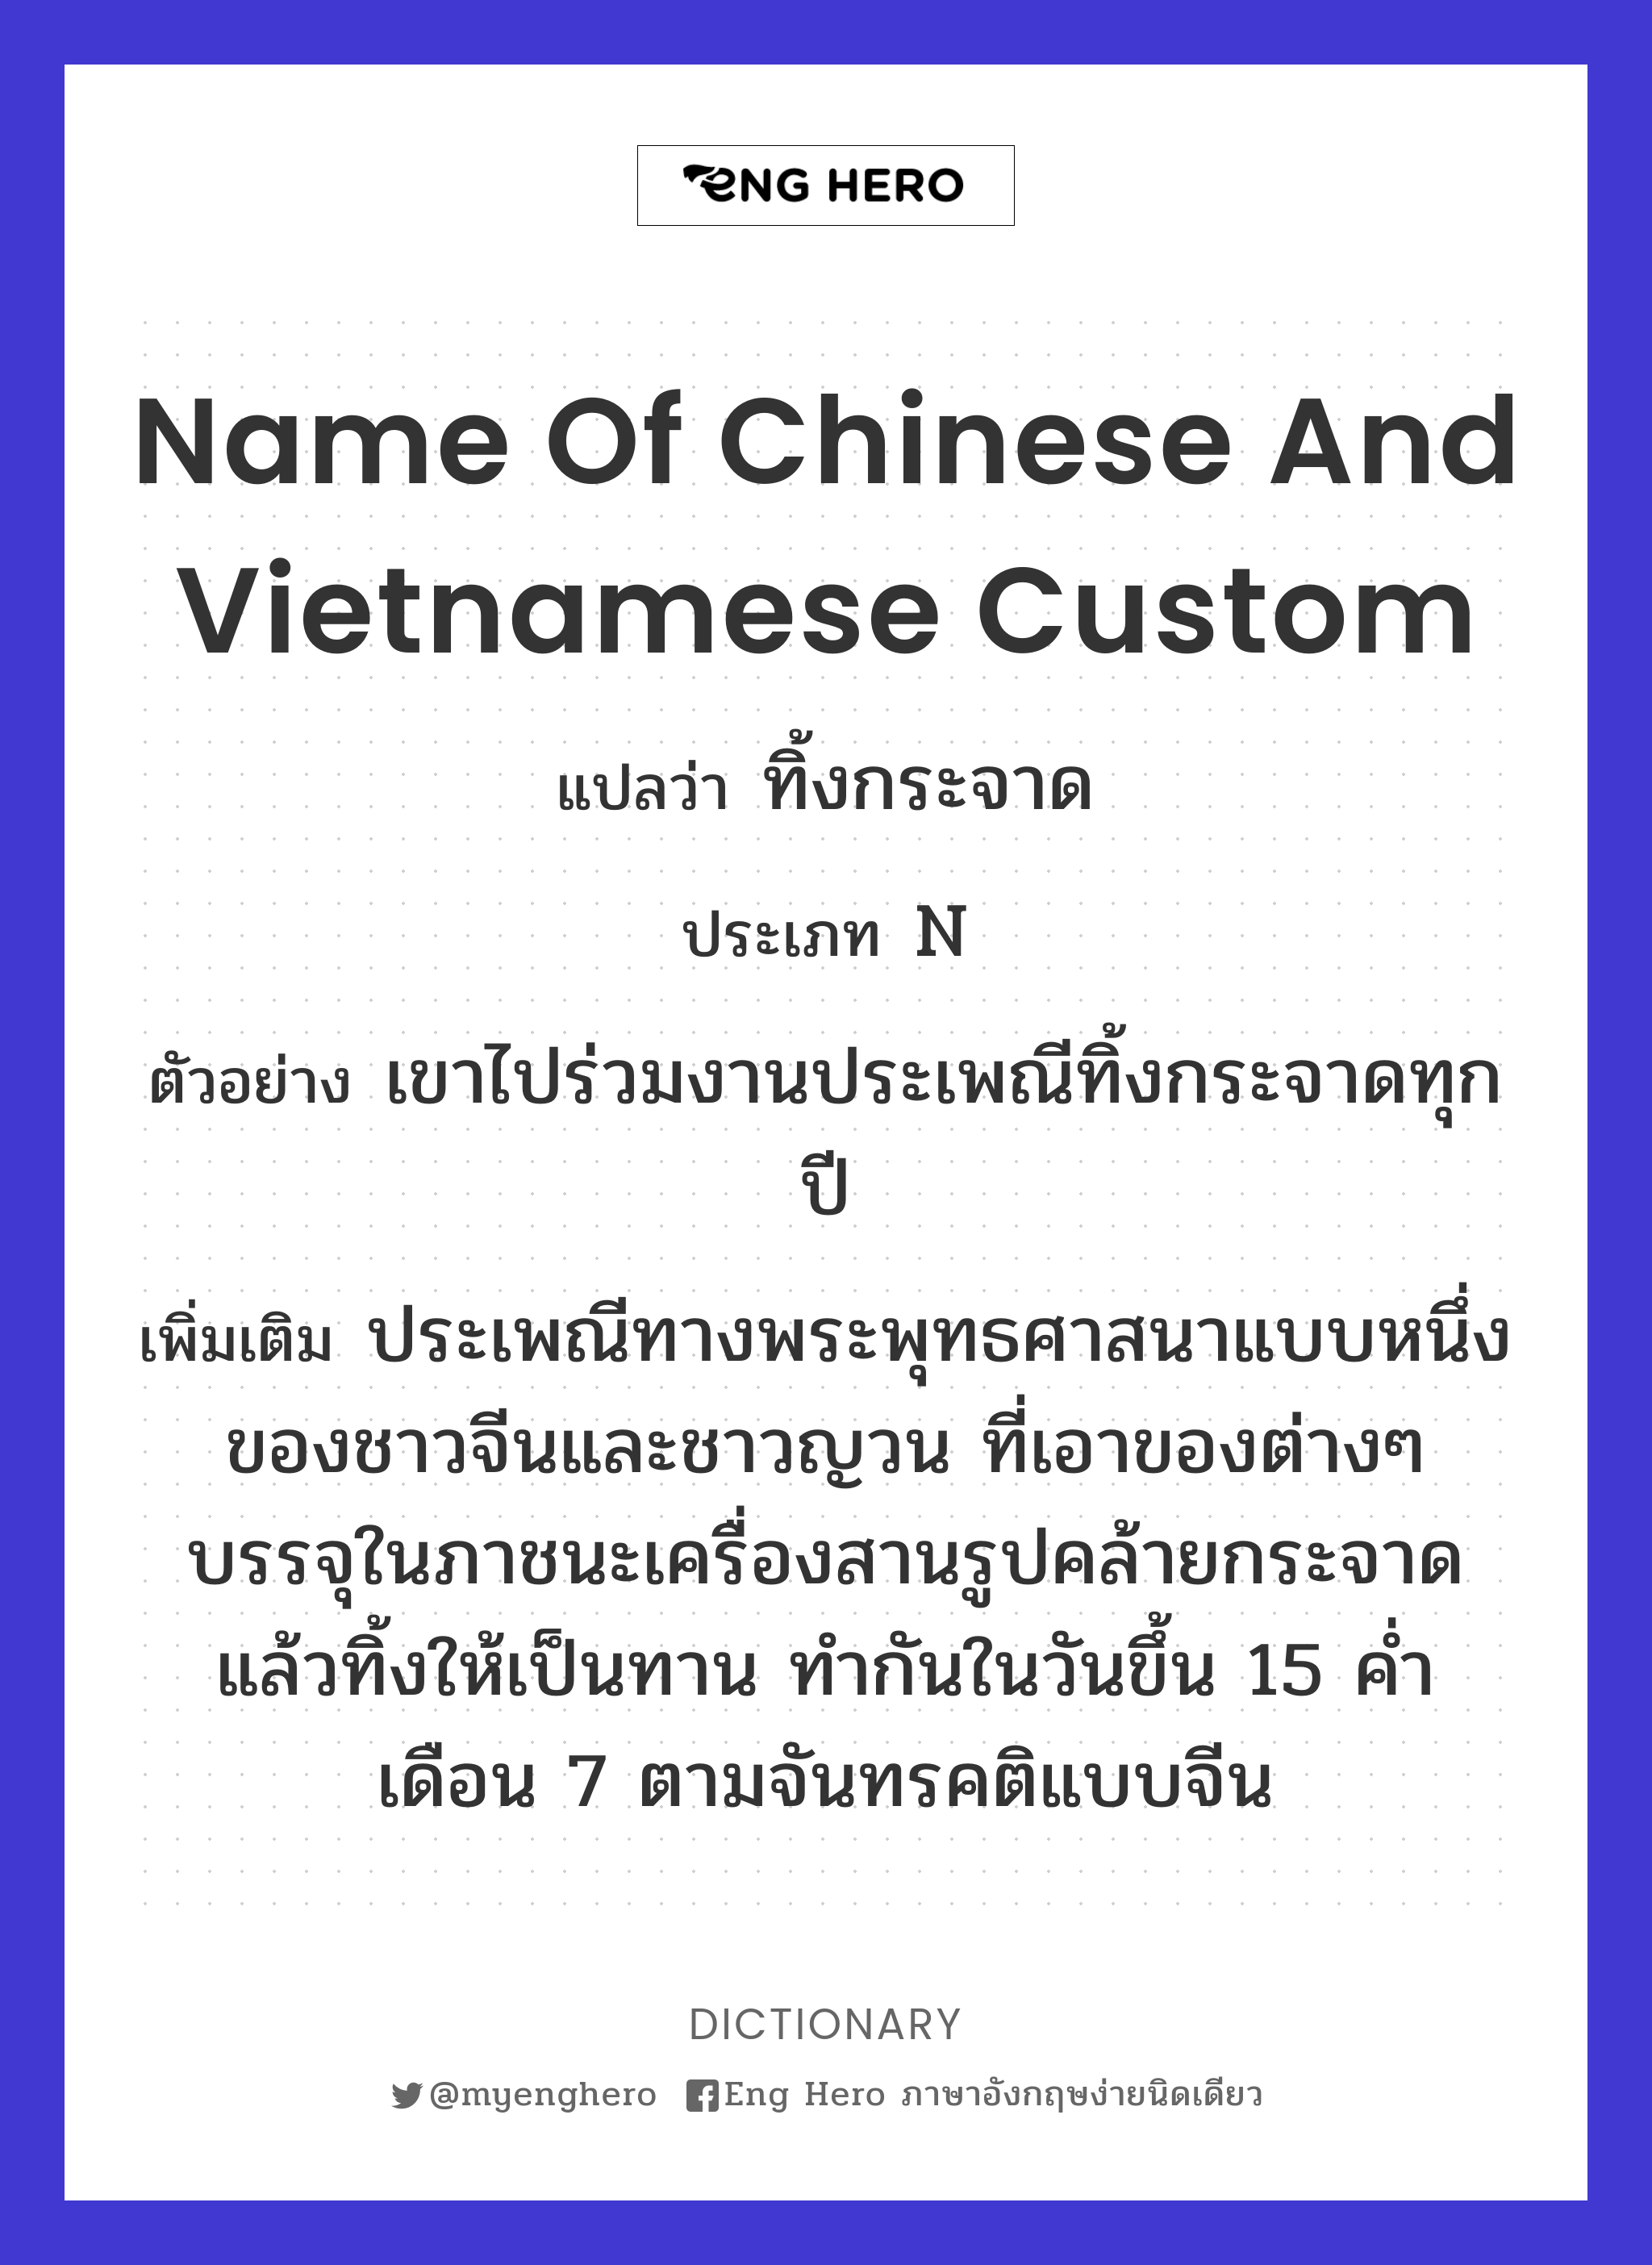 name of Chinese and Vietnamese custom